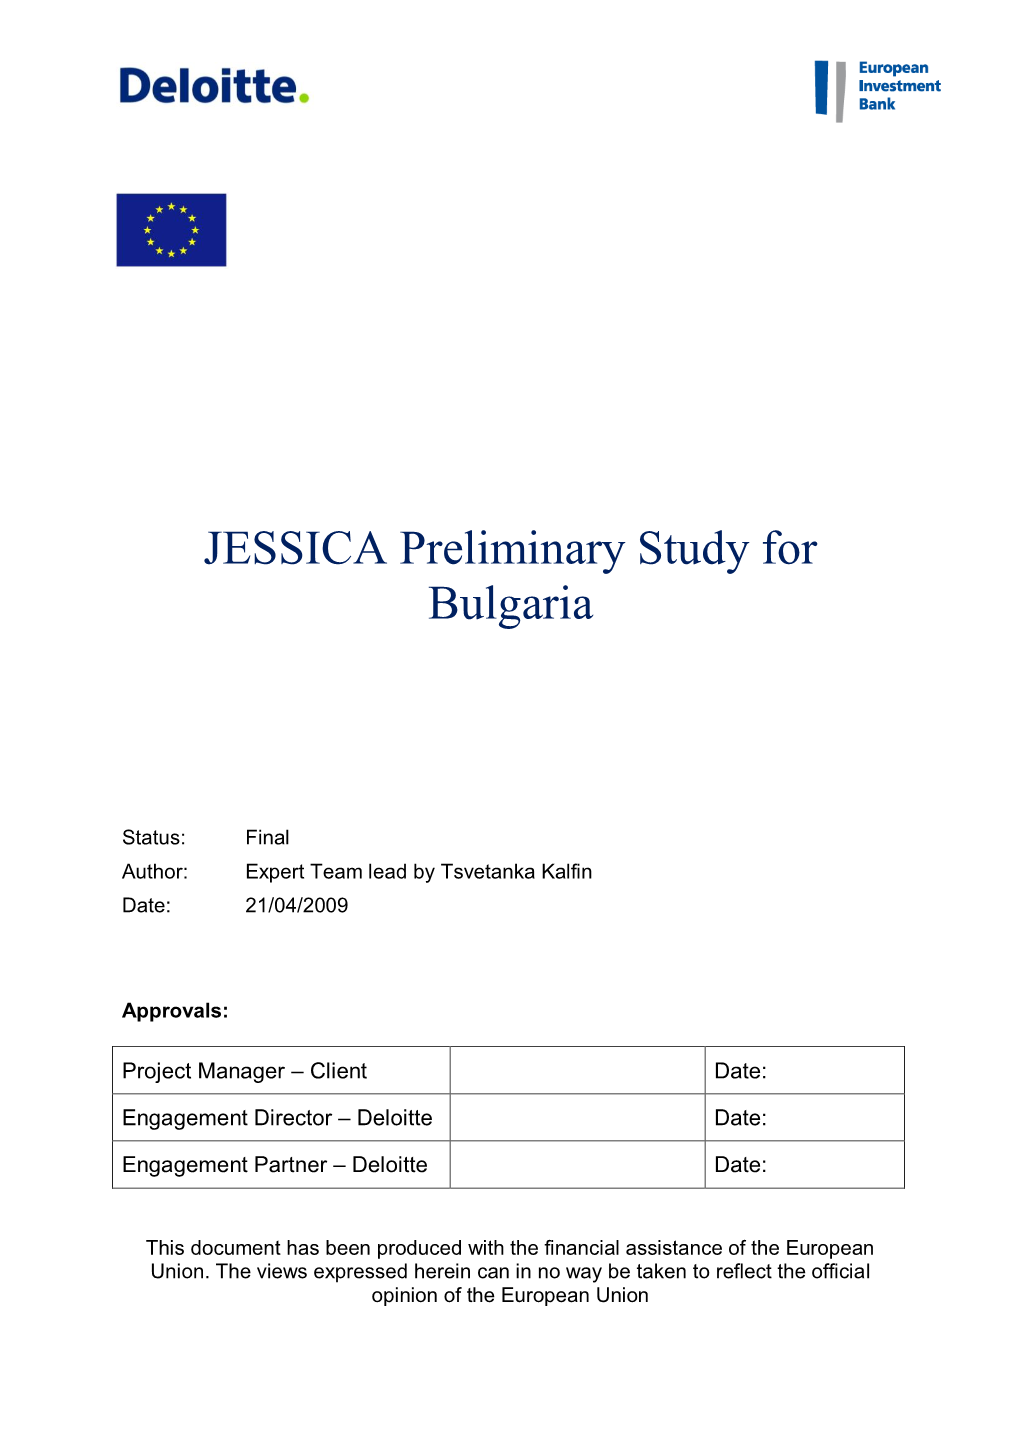 JESSICA Preliminary Study for Bulgaria